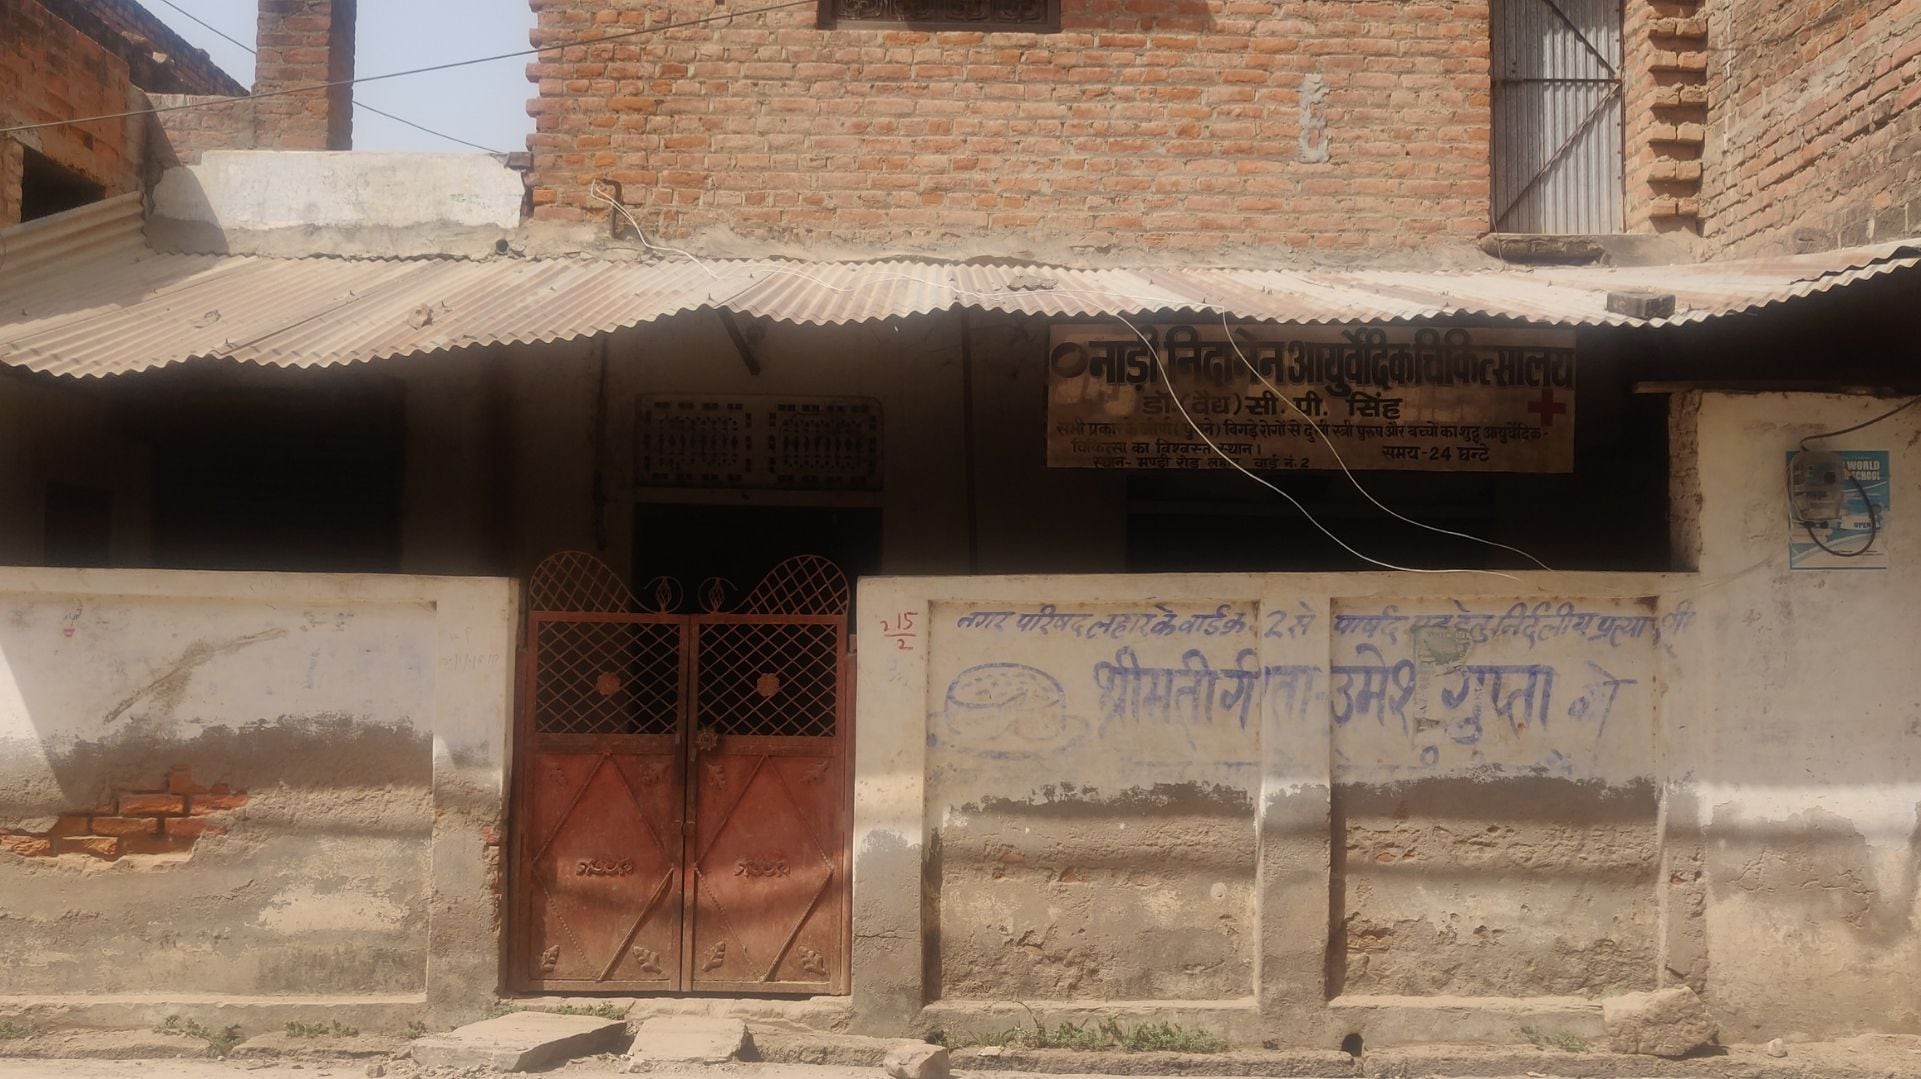 4. Outside Pragya_s house in Lahar